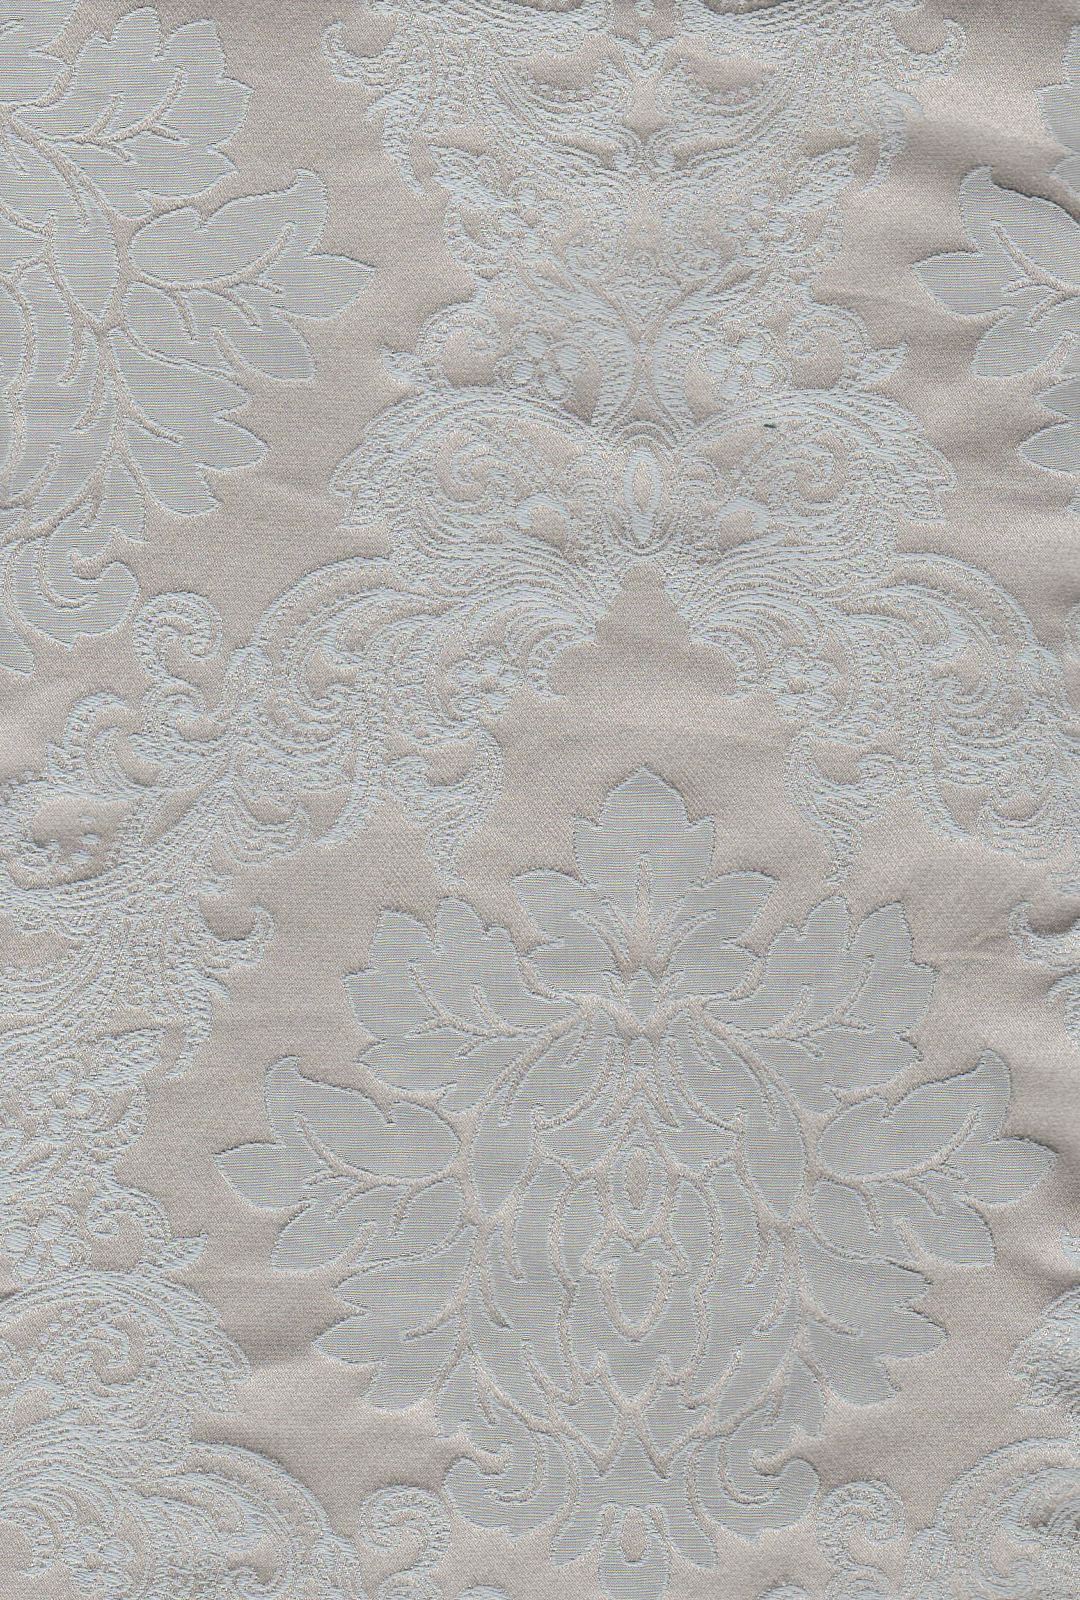 Cali Fabrics Warm White Medallion Pattern Stretch Lace Fabric by the Yard